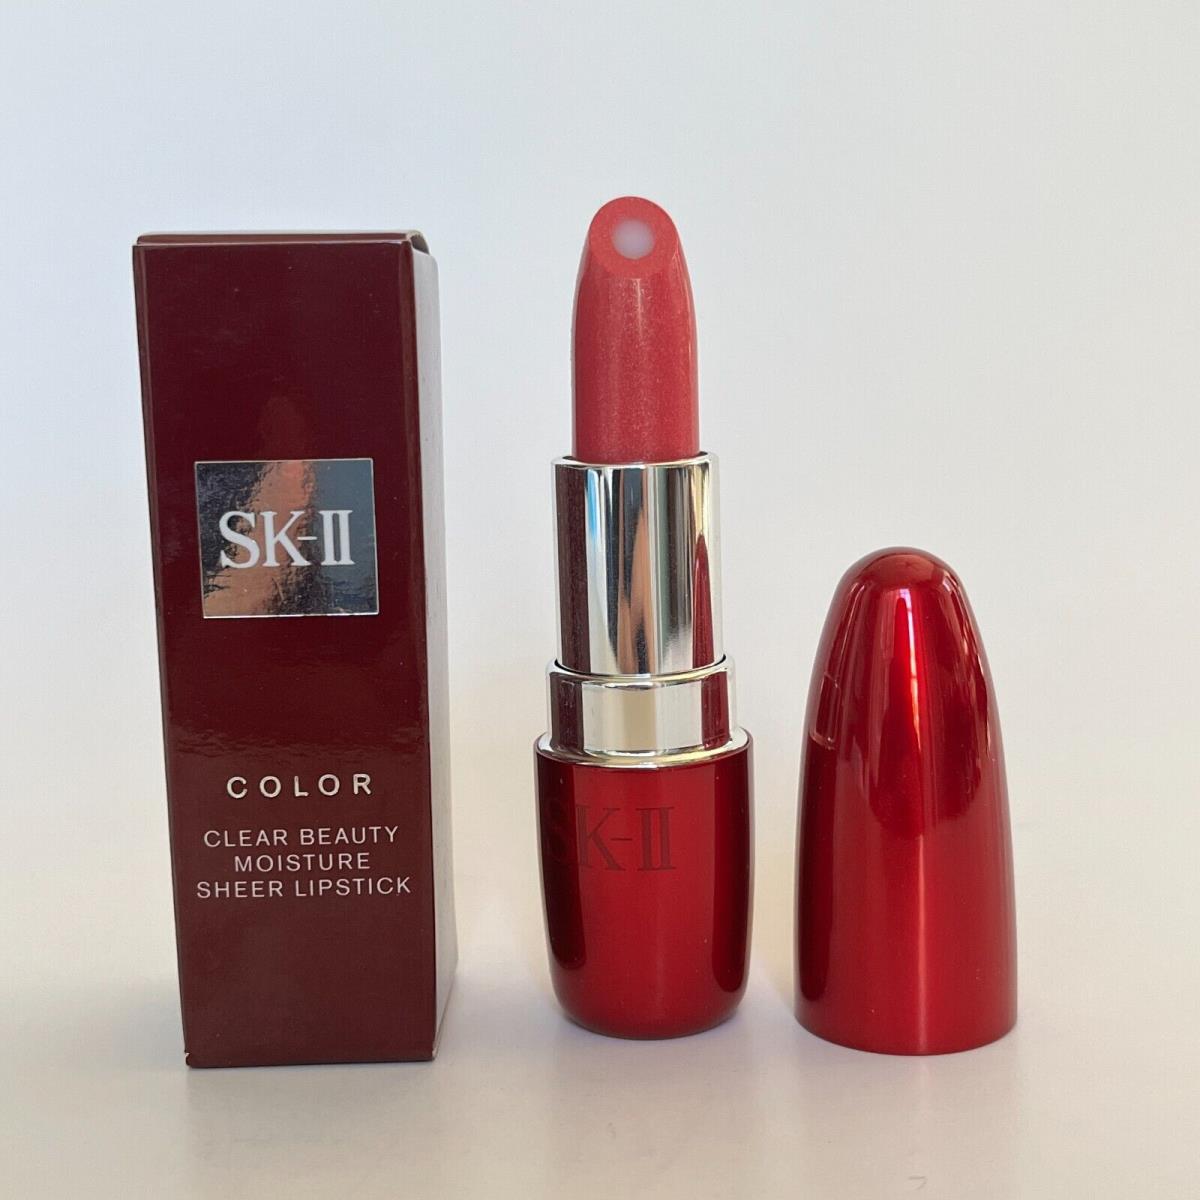 Sk-ii Color Clear Beauty Moisture Sheer Lipstick 221 Full Size 3.5g